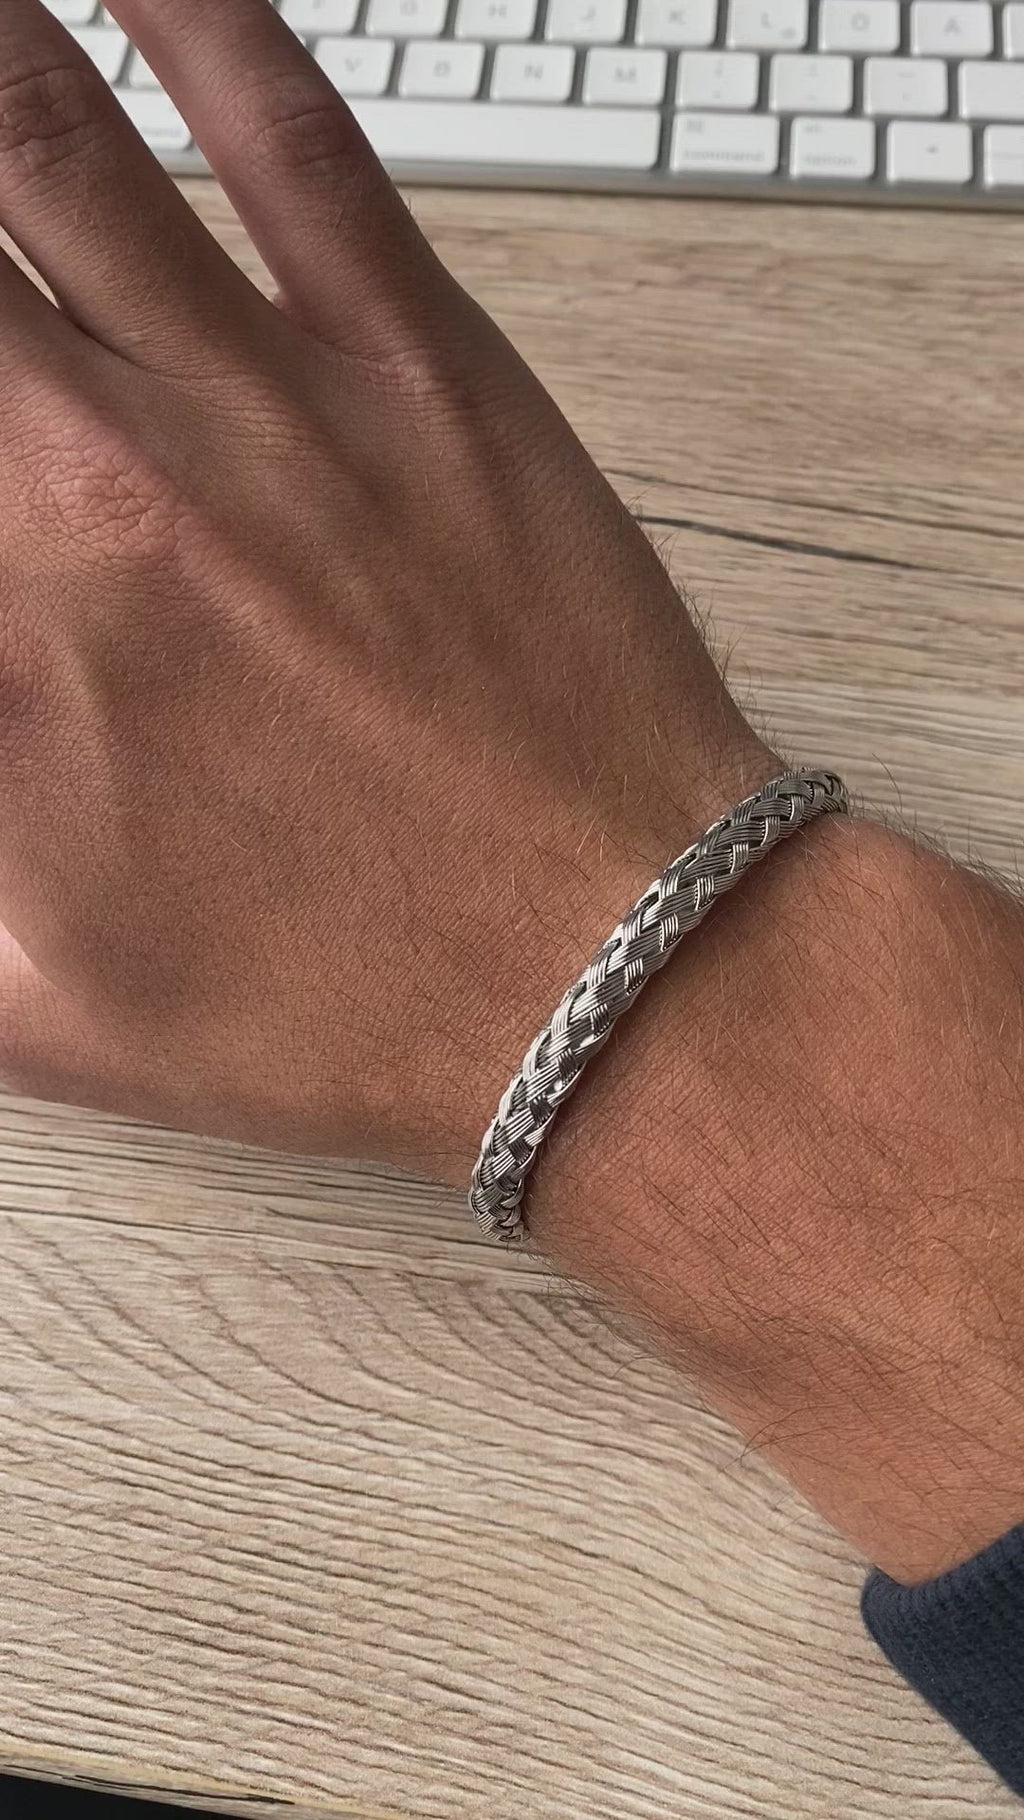 Video showing the Emils Jewellery titan bangle stainless steel bracelet